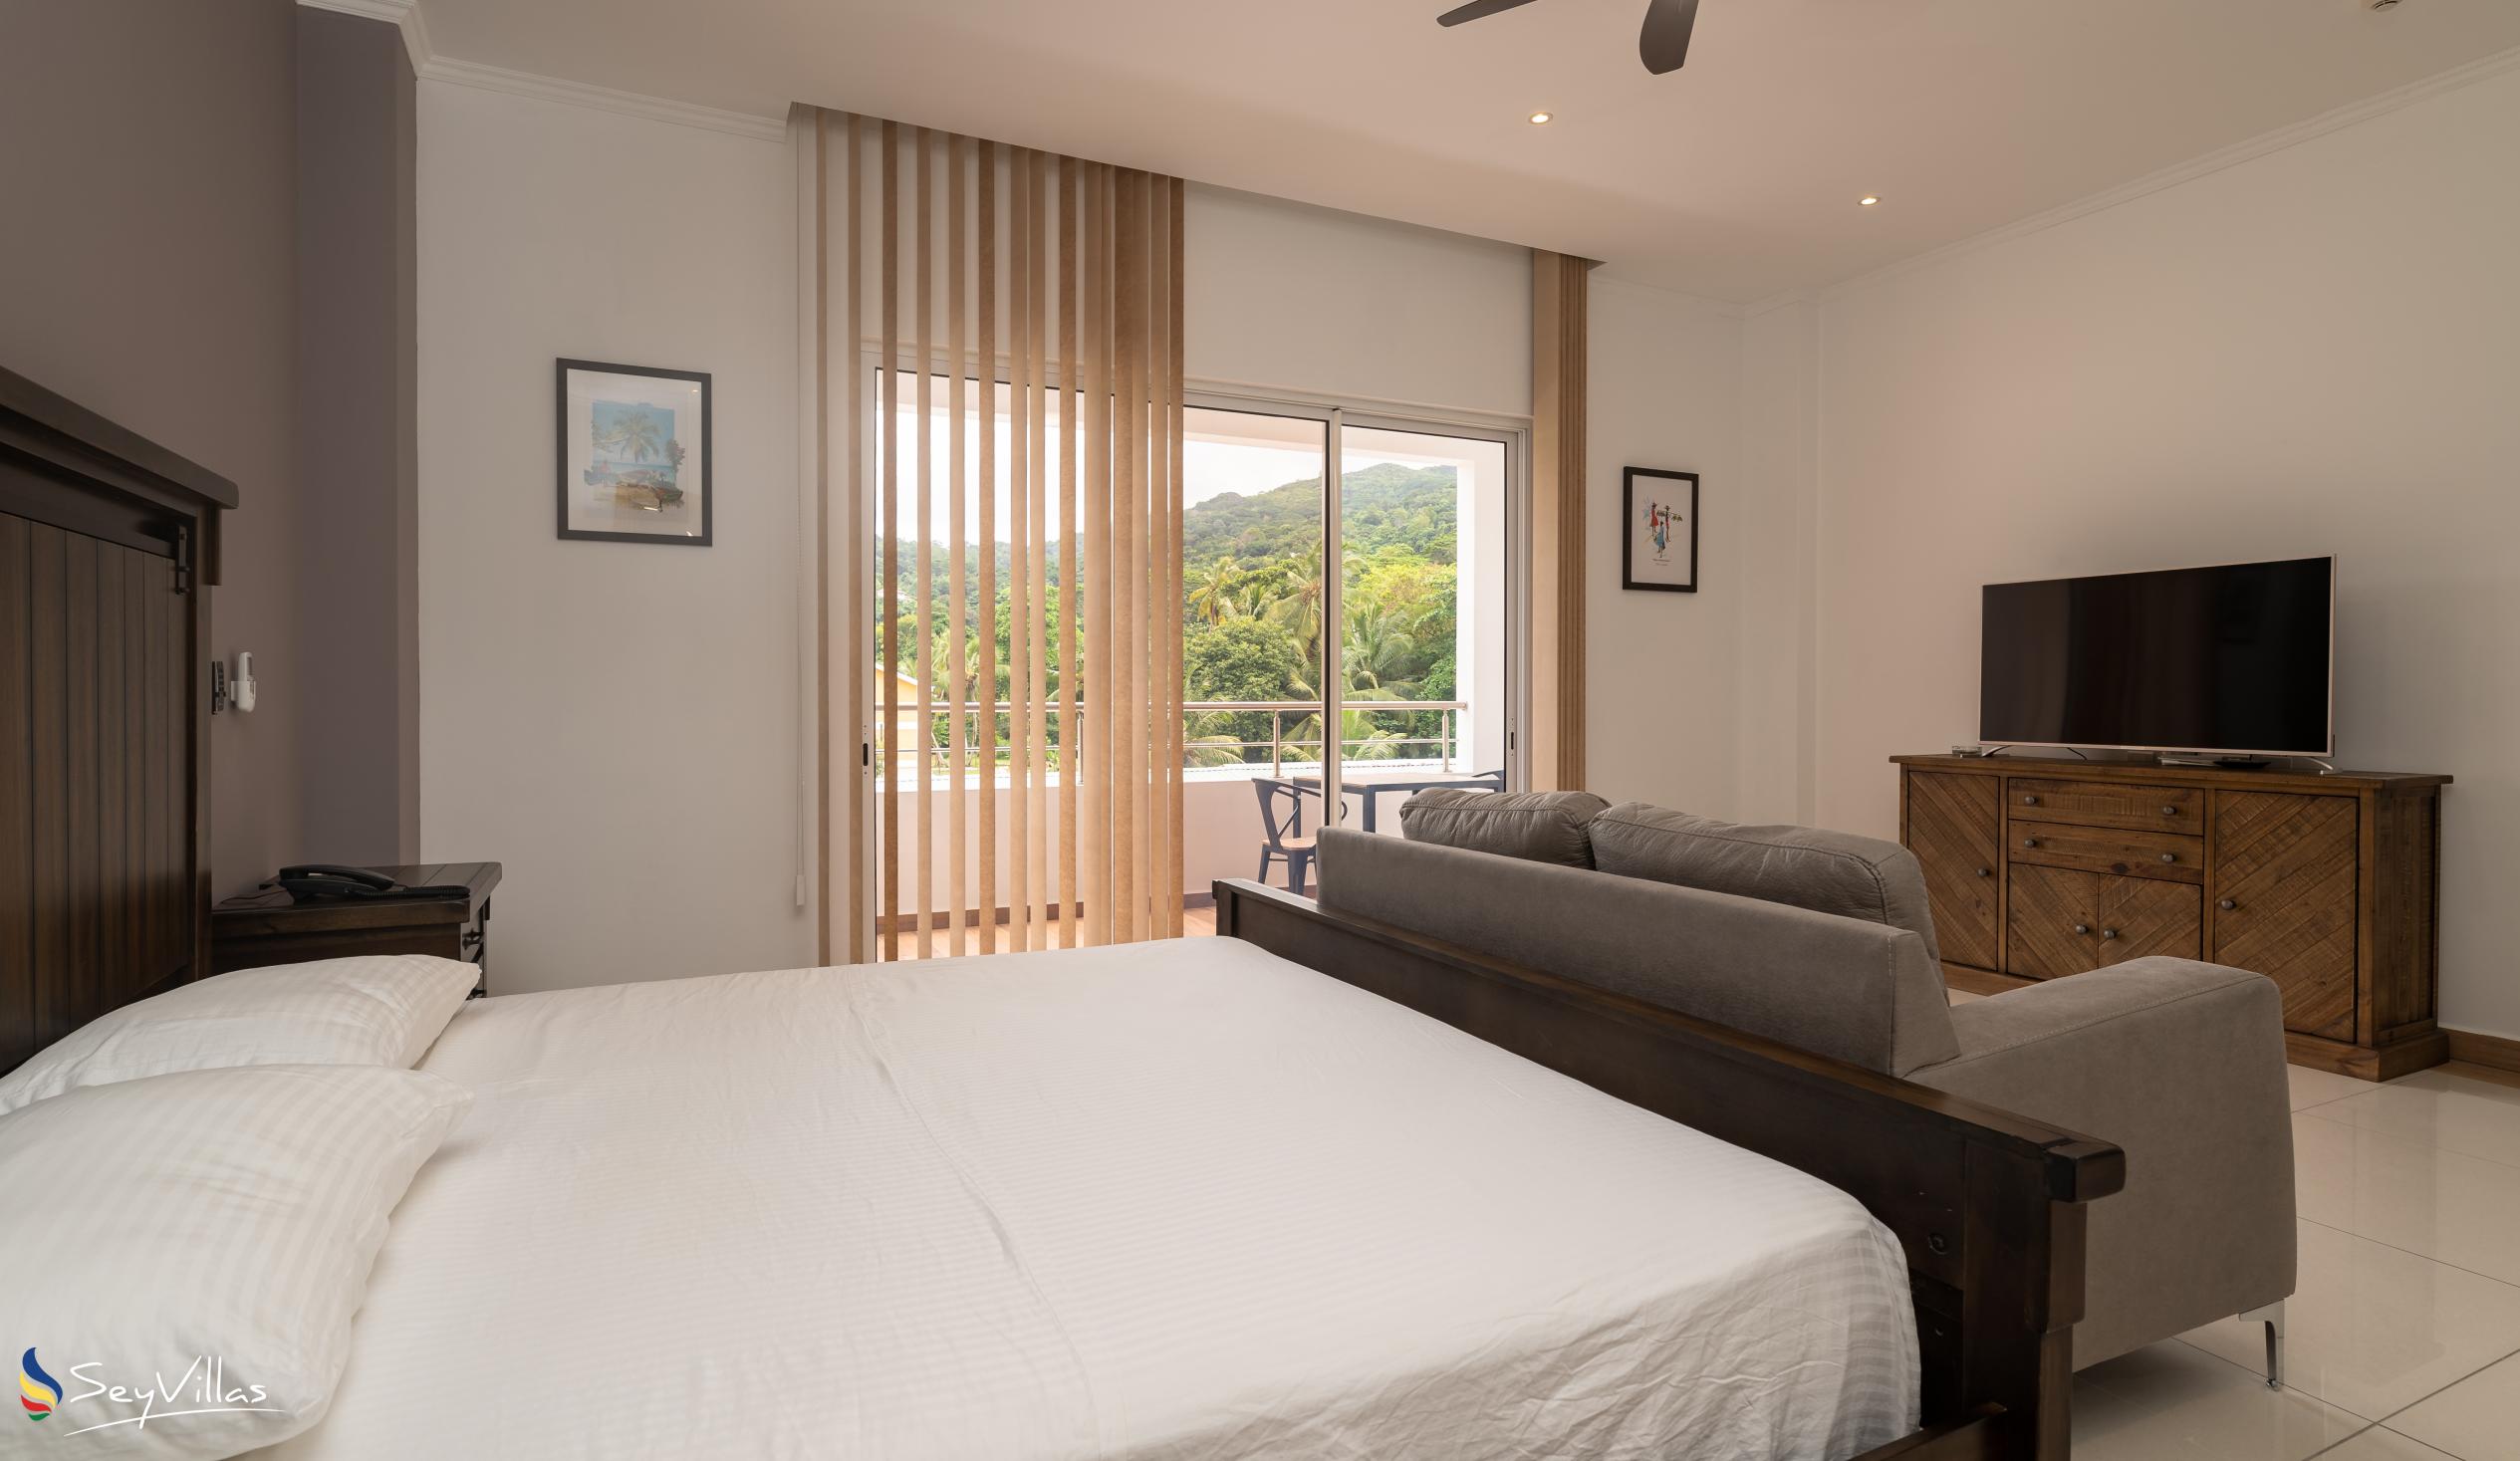 Foto 44: Royale Suites by Arc Royale Luxury Apartments - Appartamento con 1 camera - Mahé (Seychelles)